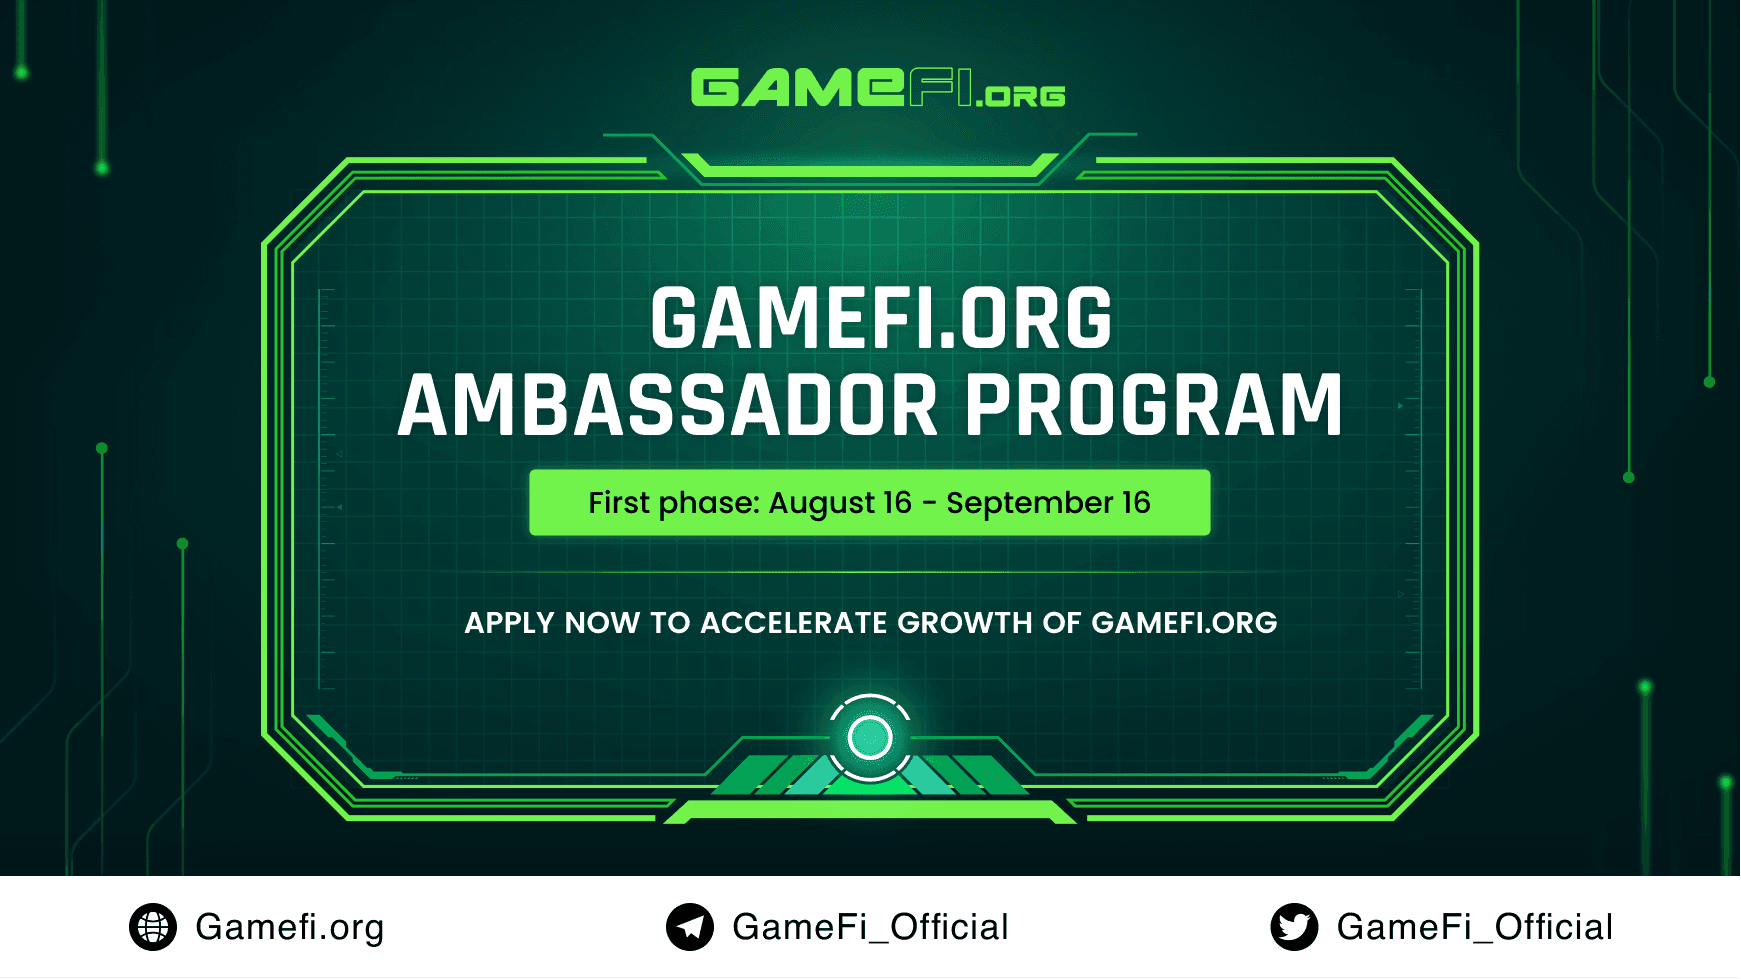 GAMEFI.ORG AMBASSADOR PROGRAM: APPLY NOW TO ACCELERATE THE GROWTH OF GAMEFI.ORG